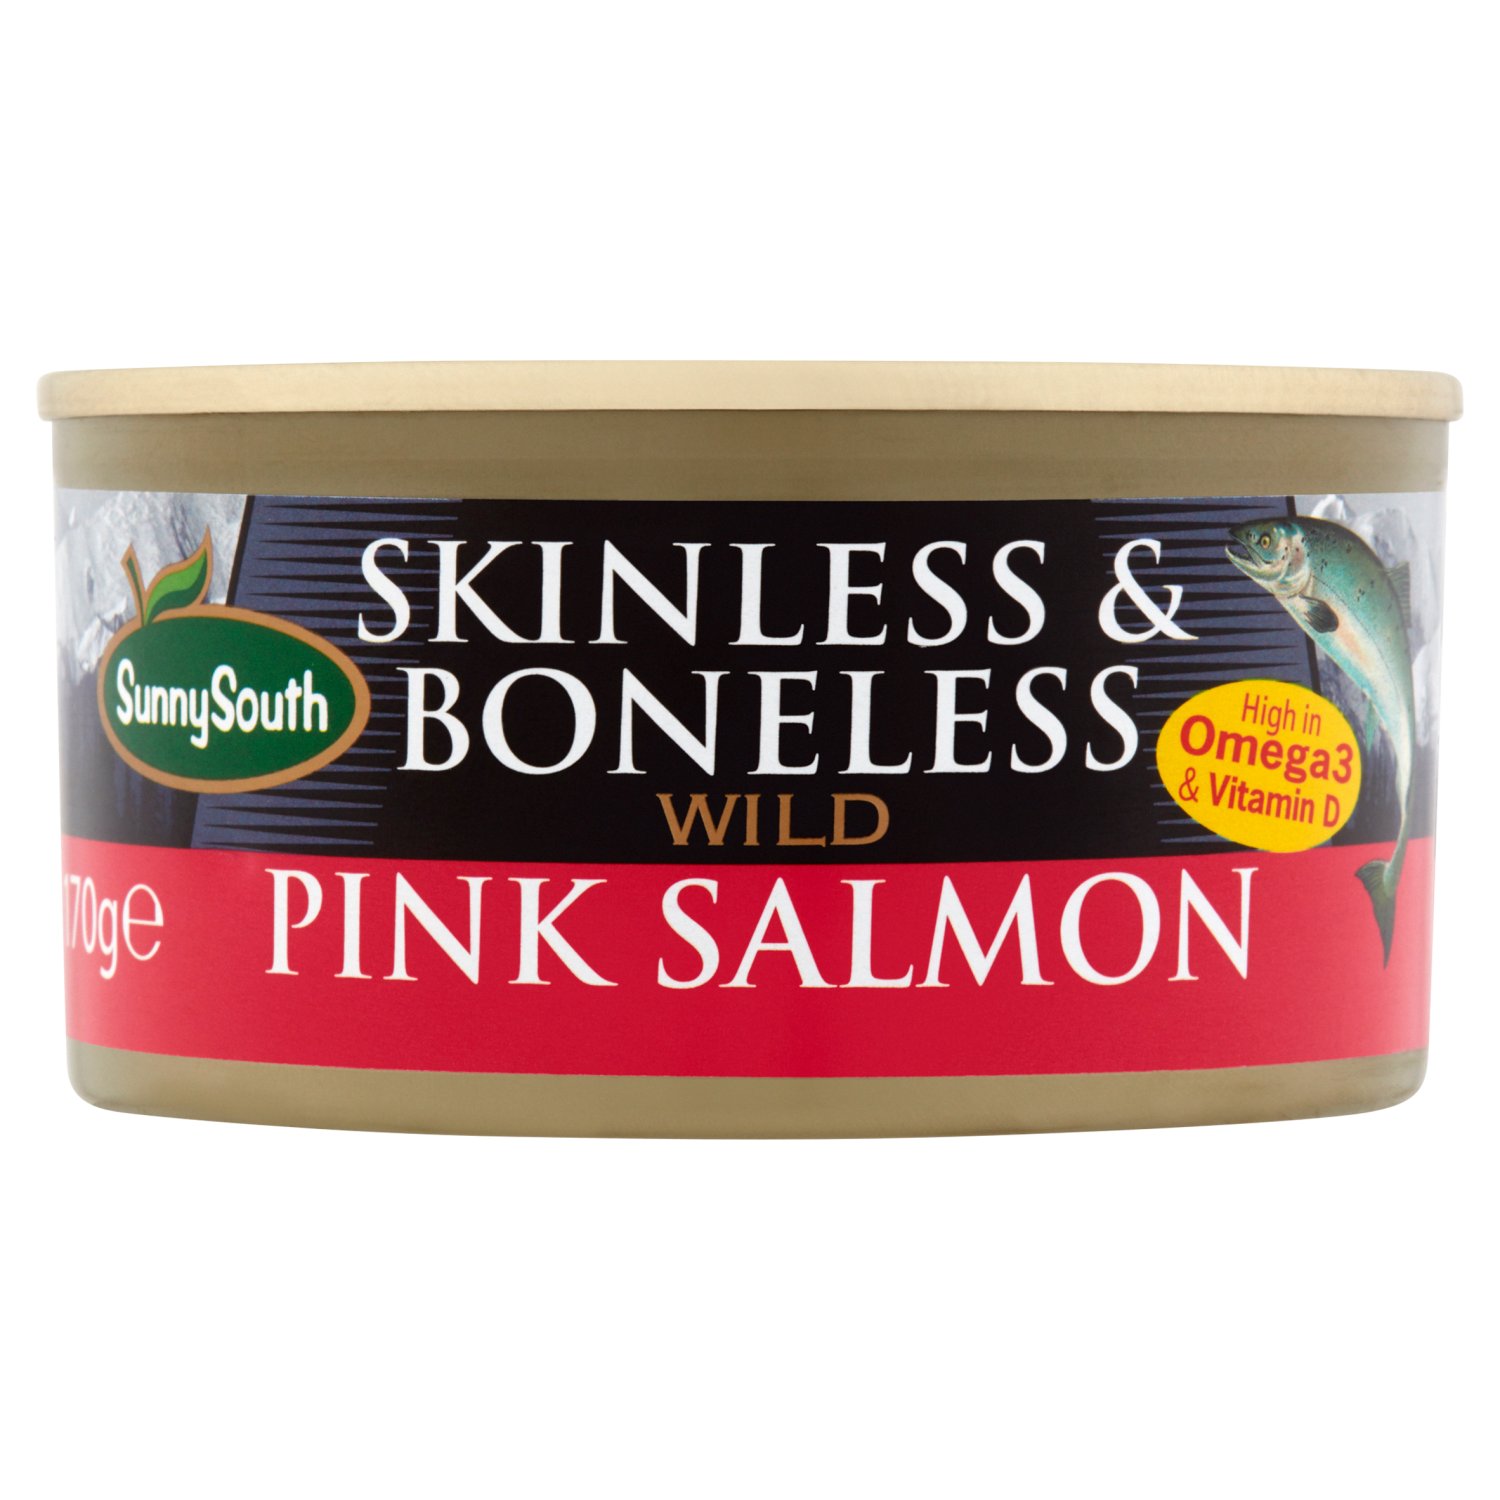 Sunny South Skinless & Boneless Wild Pink Salmon 170g